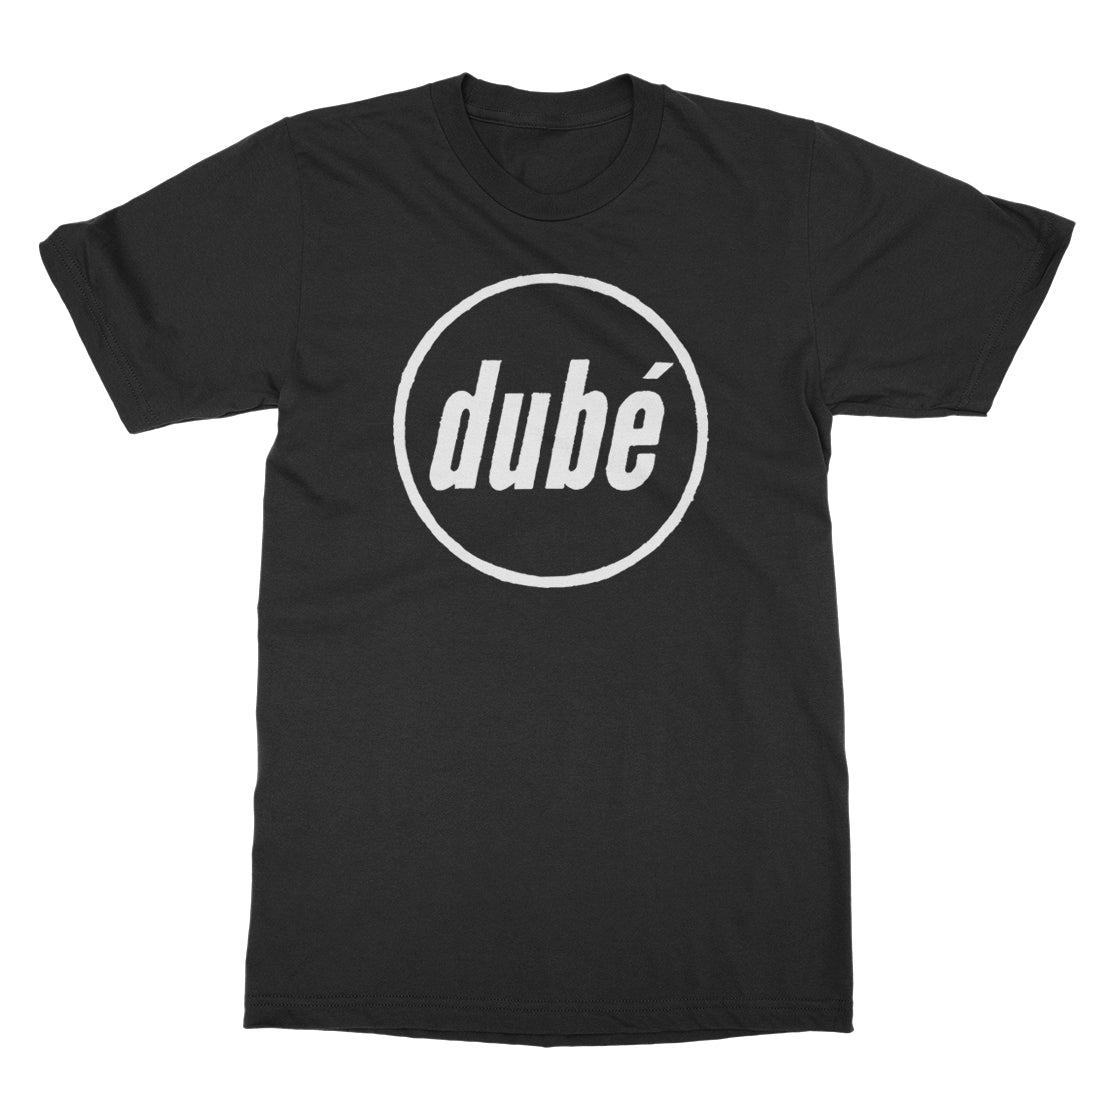 Dube - Logo - Black Tee